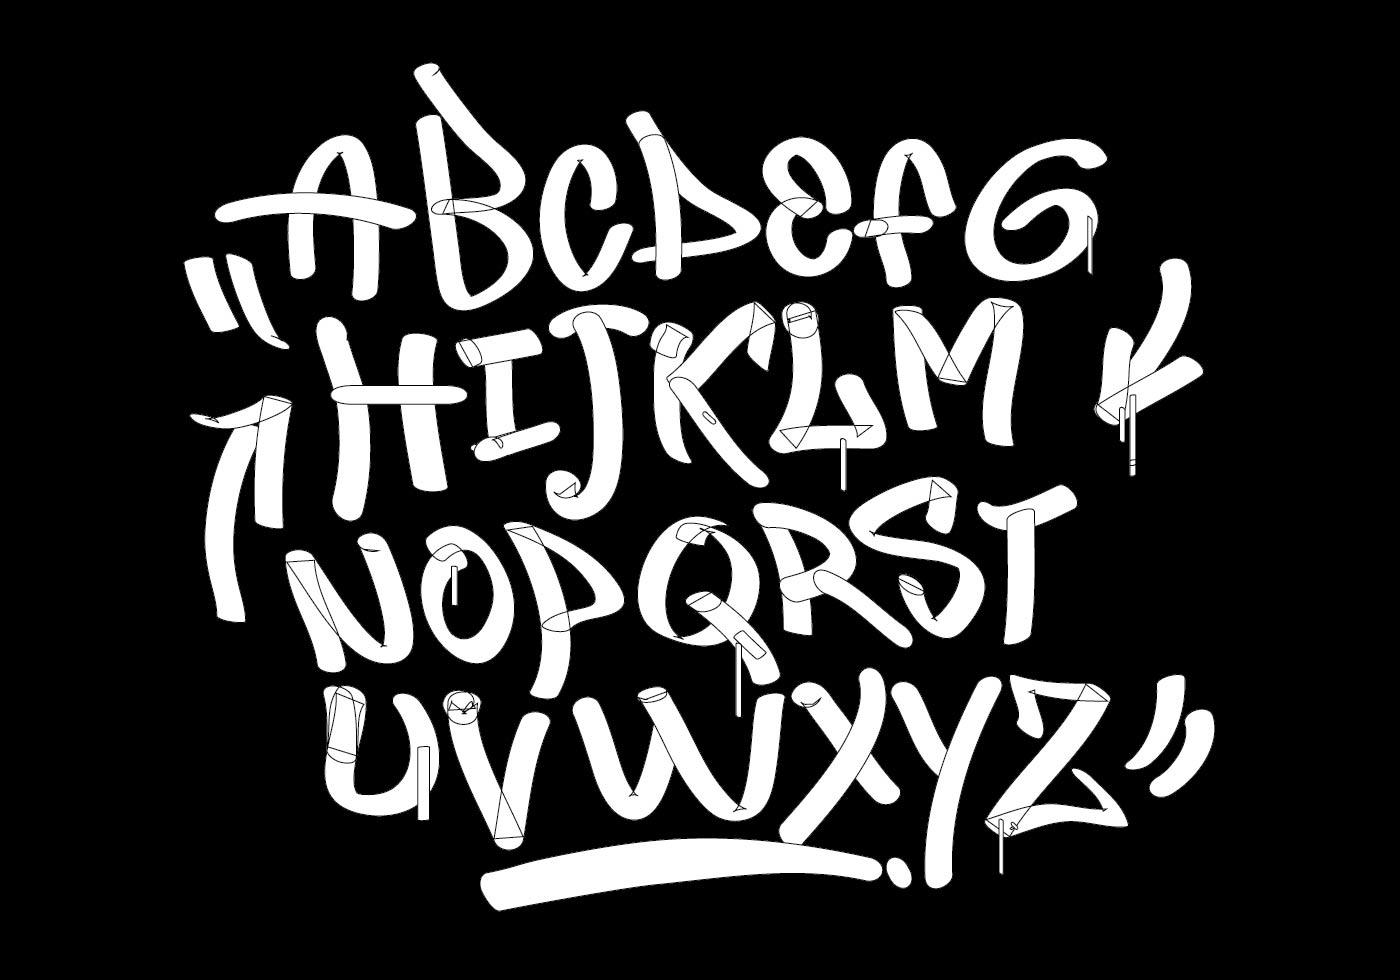 Шрифт marker русский. Теги граффити. Шрифты для тегов. Граффити шрифты. Шрифт маркером.